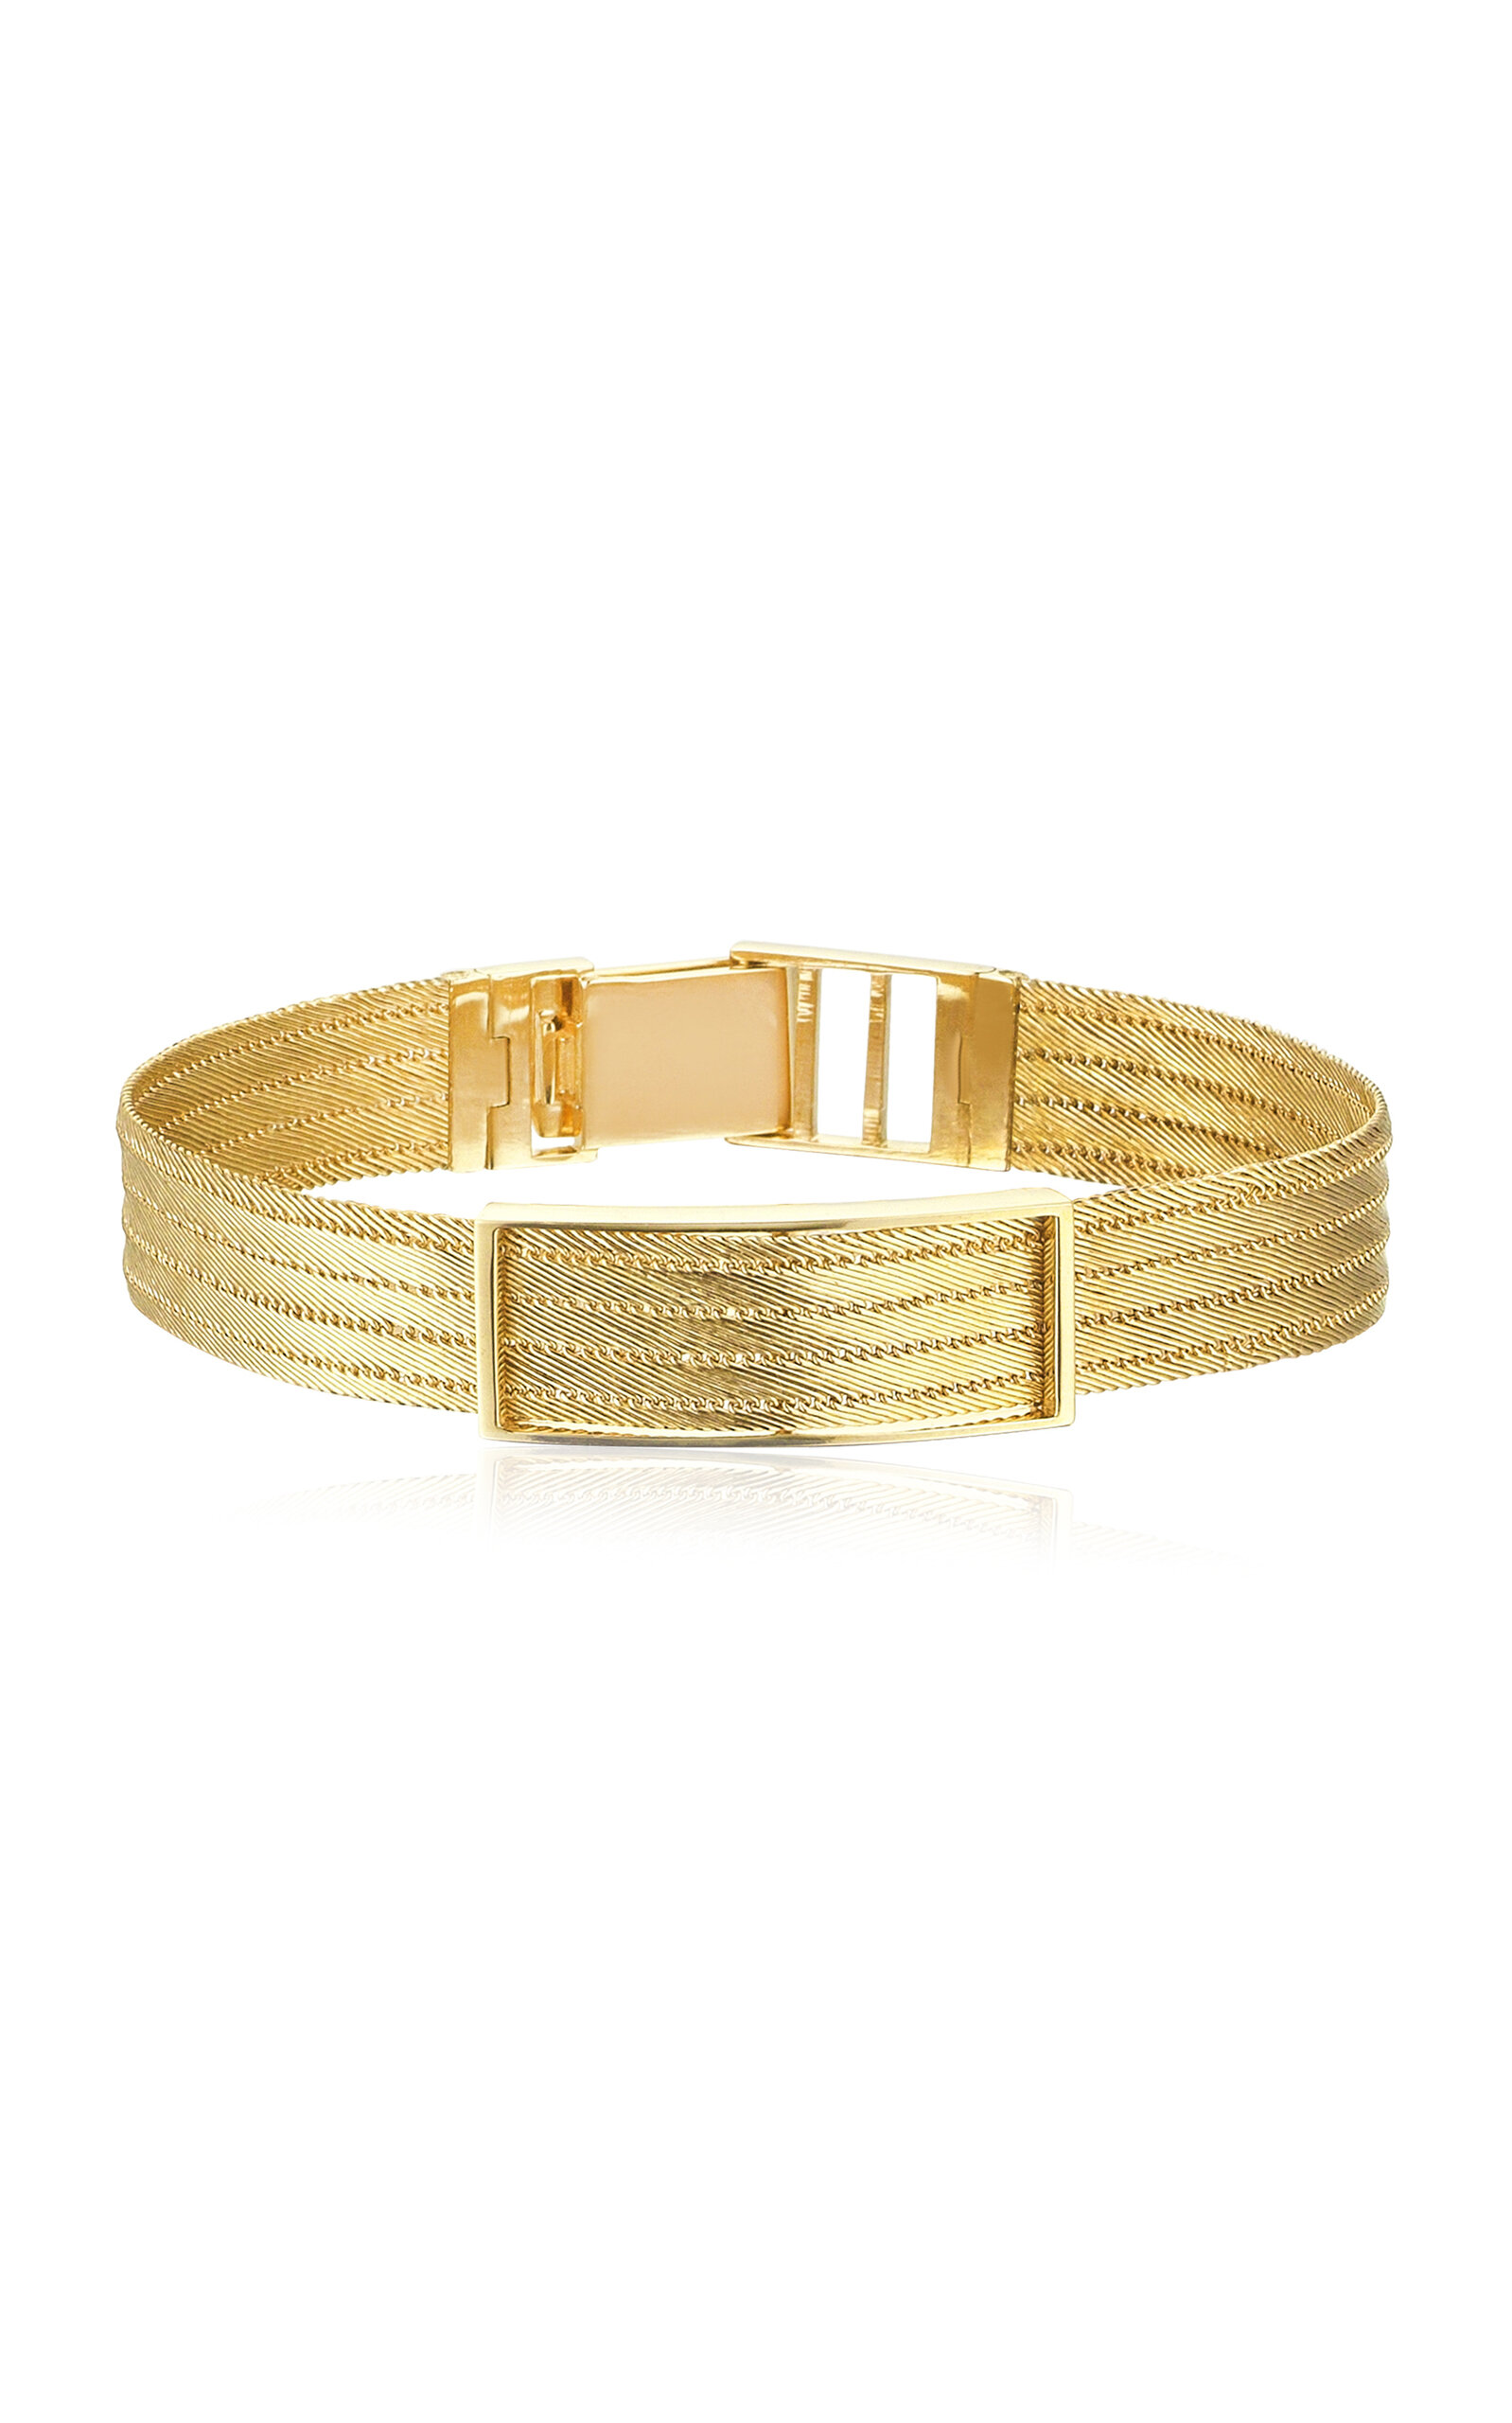 XLarge Buckle 14K Yellow Gold Bracelet